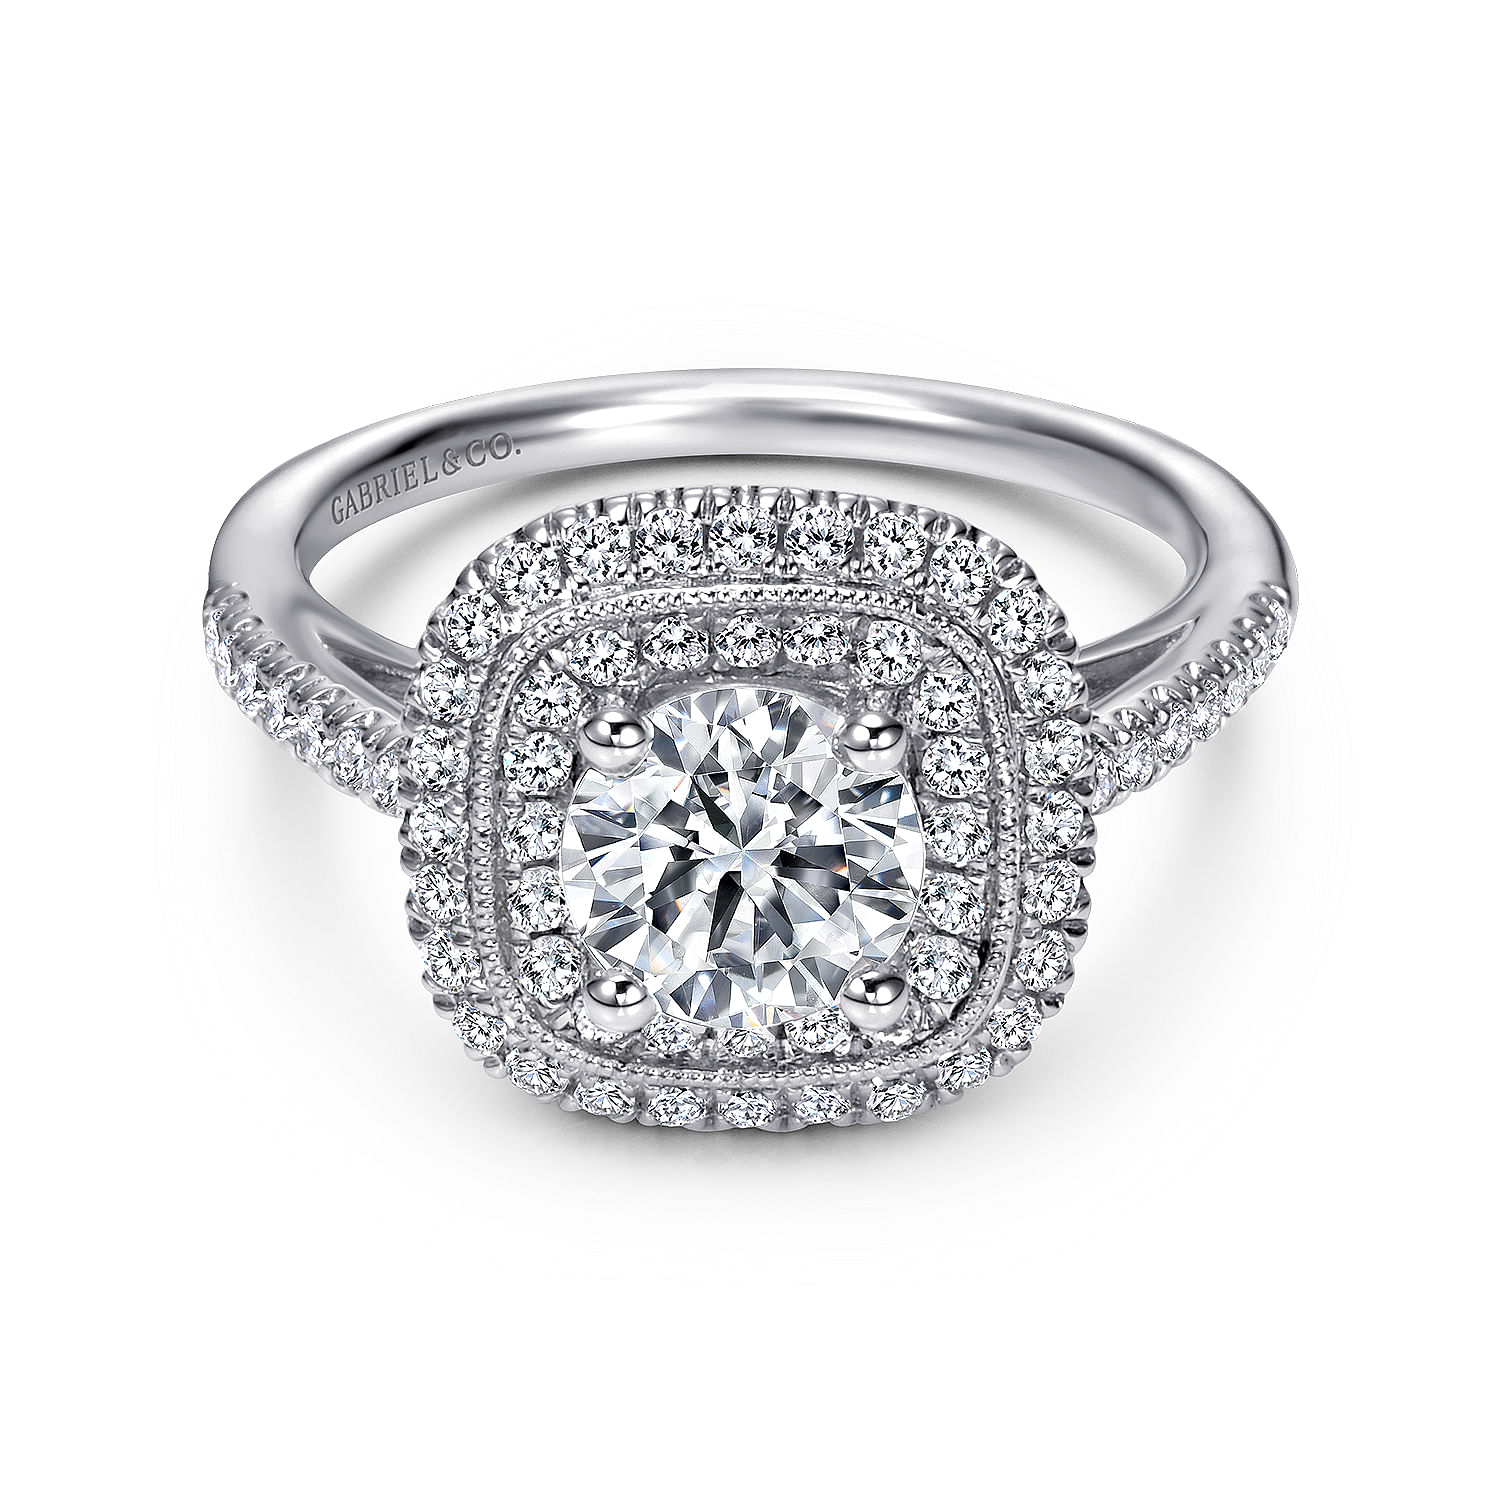 Gabriel - Vintage Inspired 14K White Gold Round Double Halo Diamond Engagement Ring